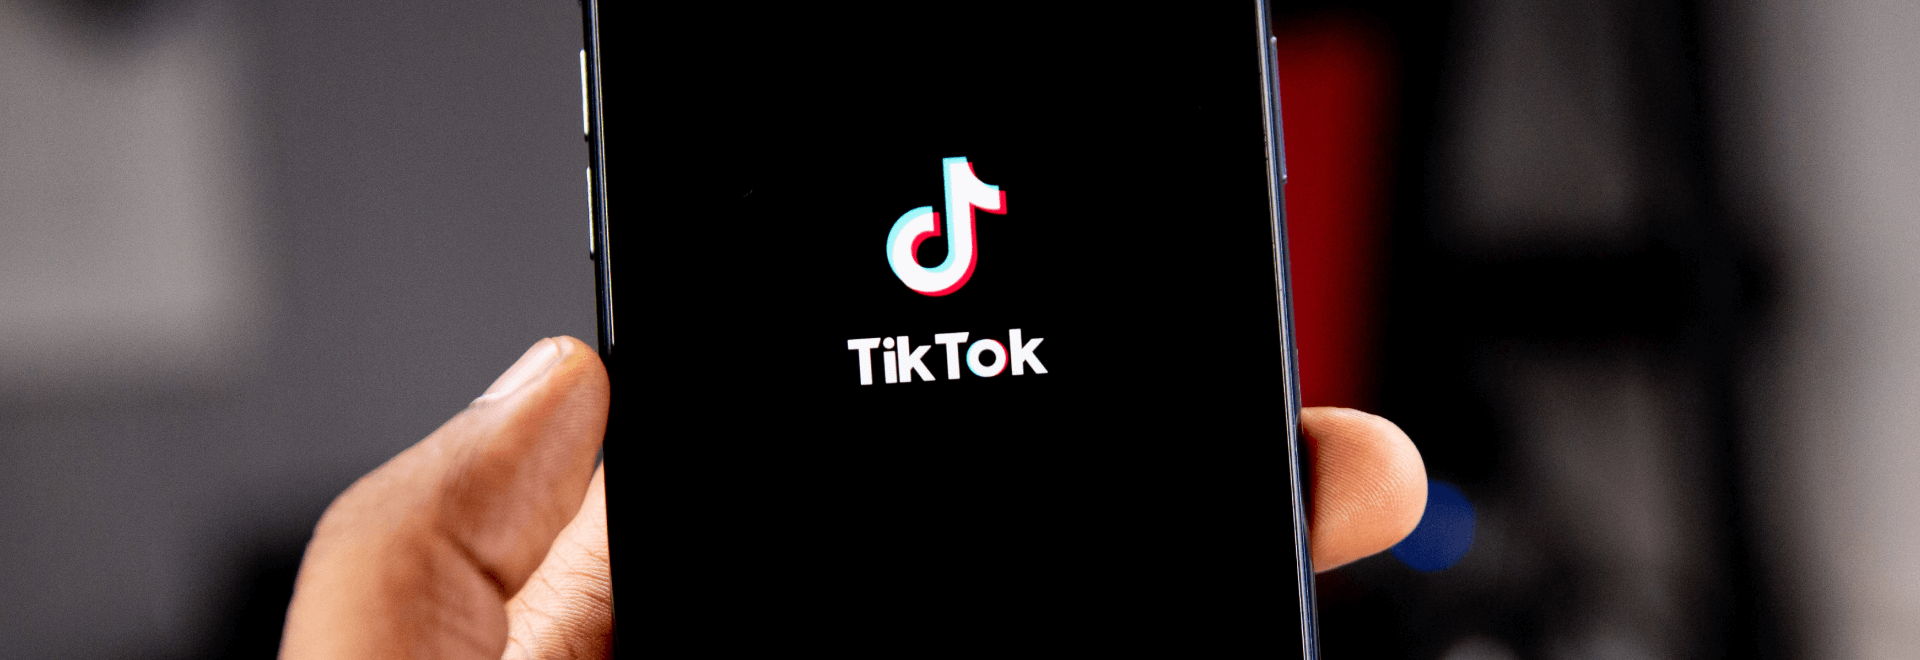 Will the United States ban TikTok?